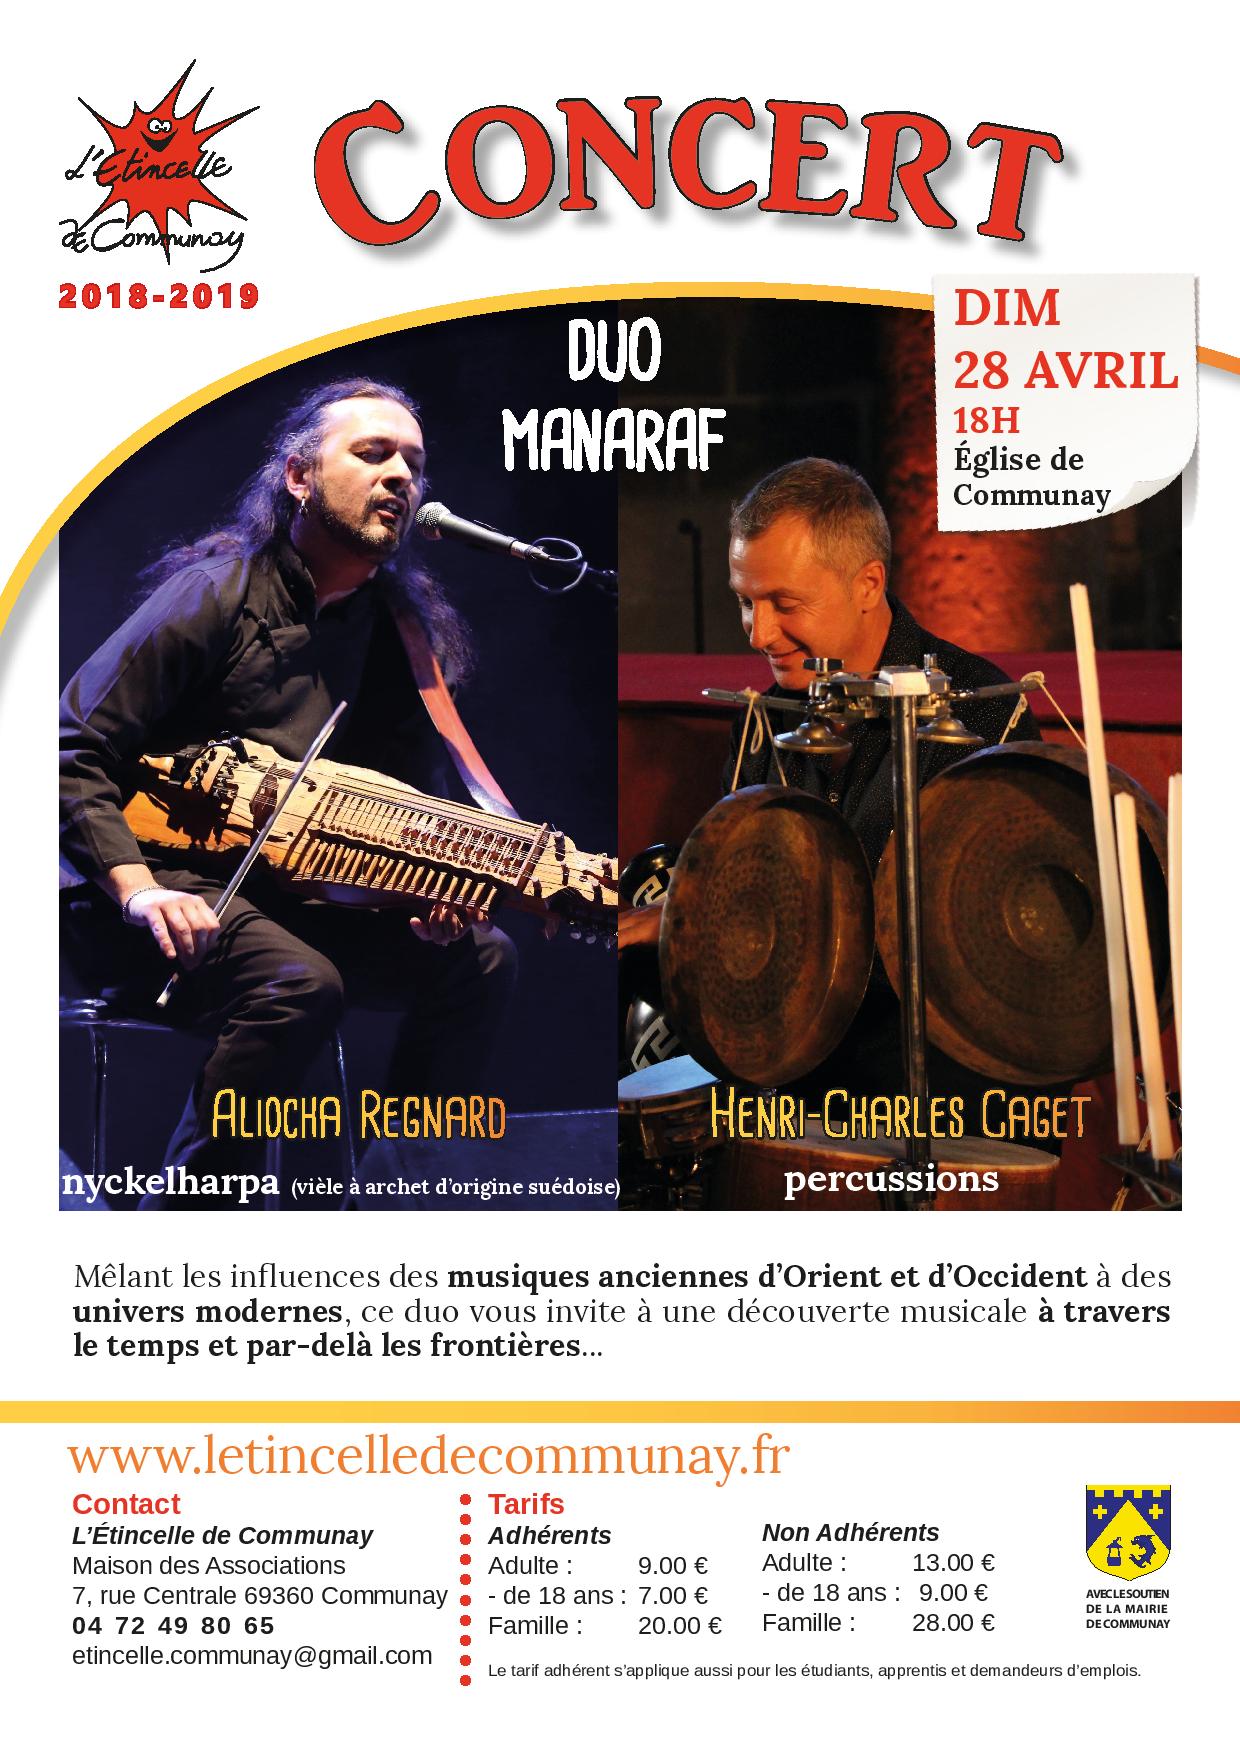 Dim 28 avril : Concert “Duo Manaraf”